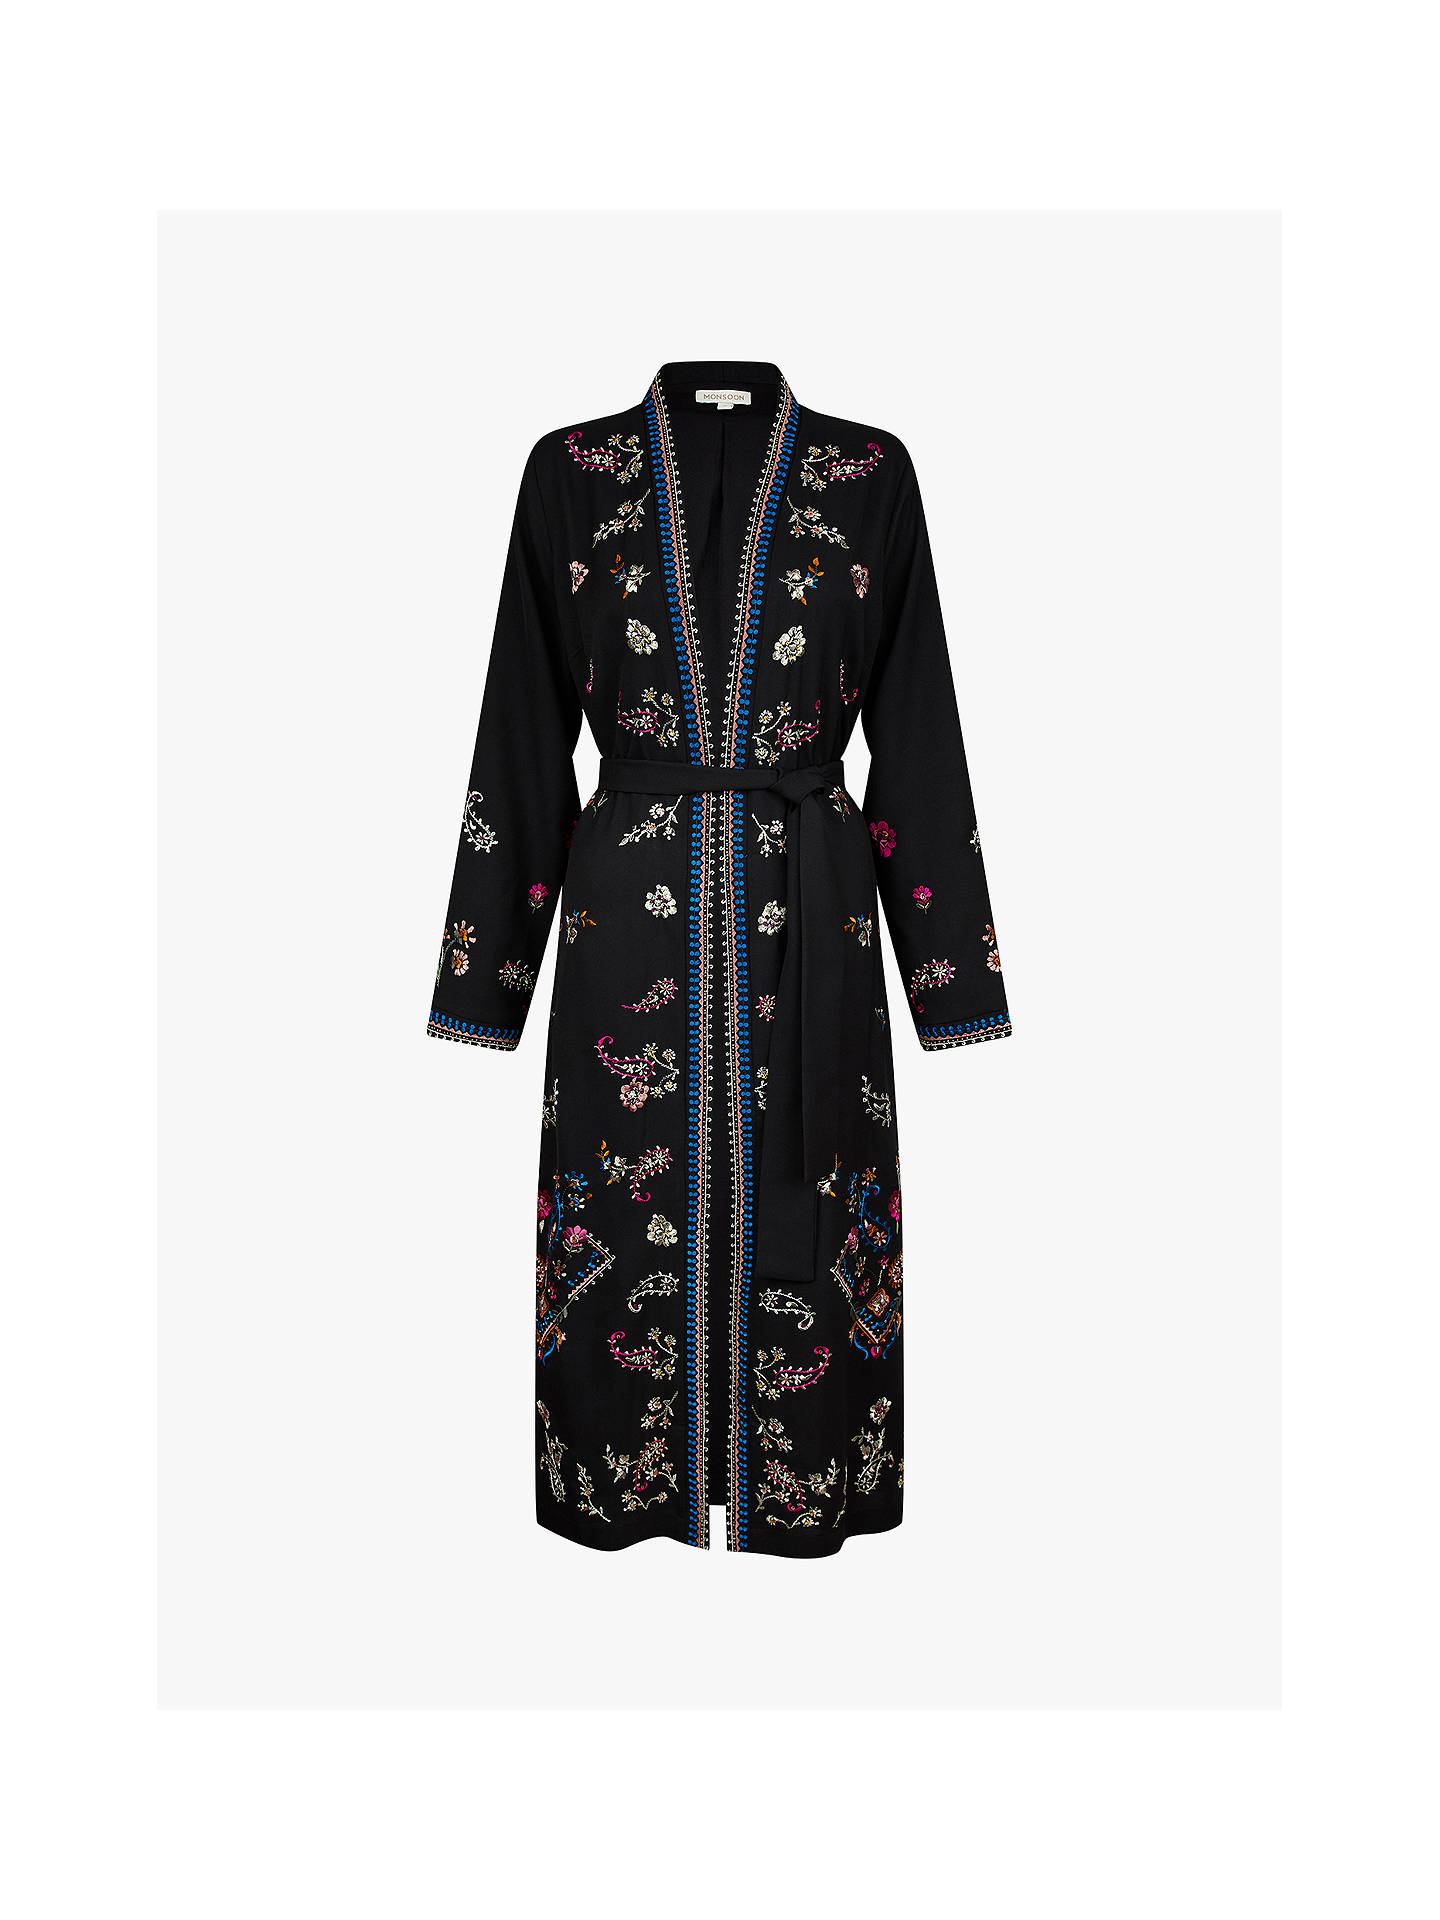 Monsoon Raja Embroidered Kimono, Black at John Lewis & Partners